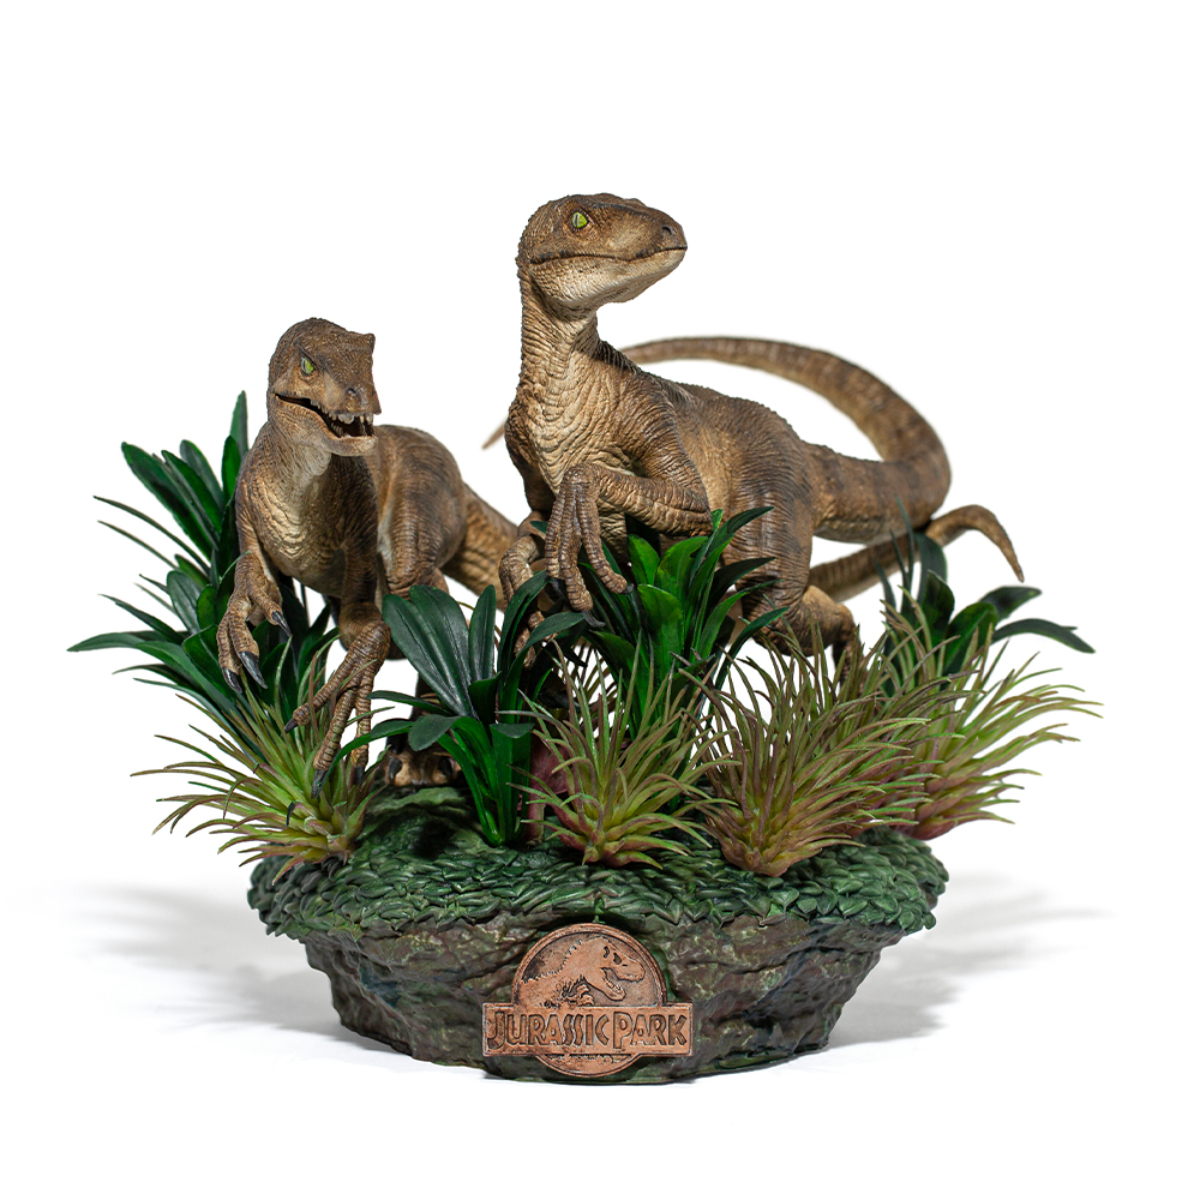 Just Statue Two Deluxe 1/10 Raptors STUDIOS IRON Jurassic The Park Sammelfigur -